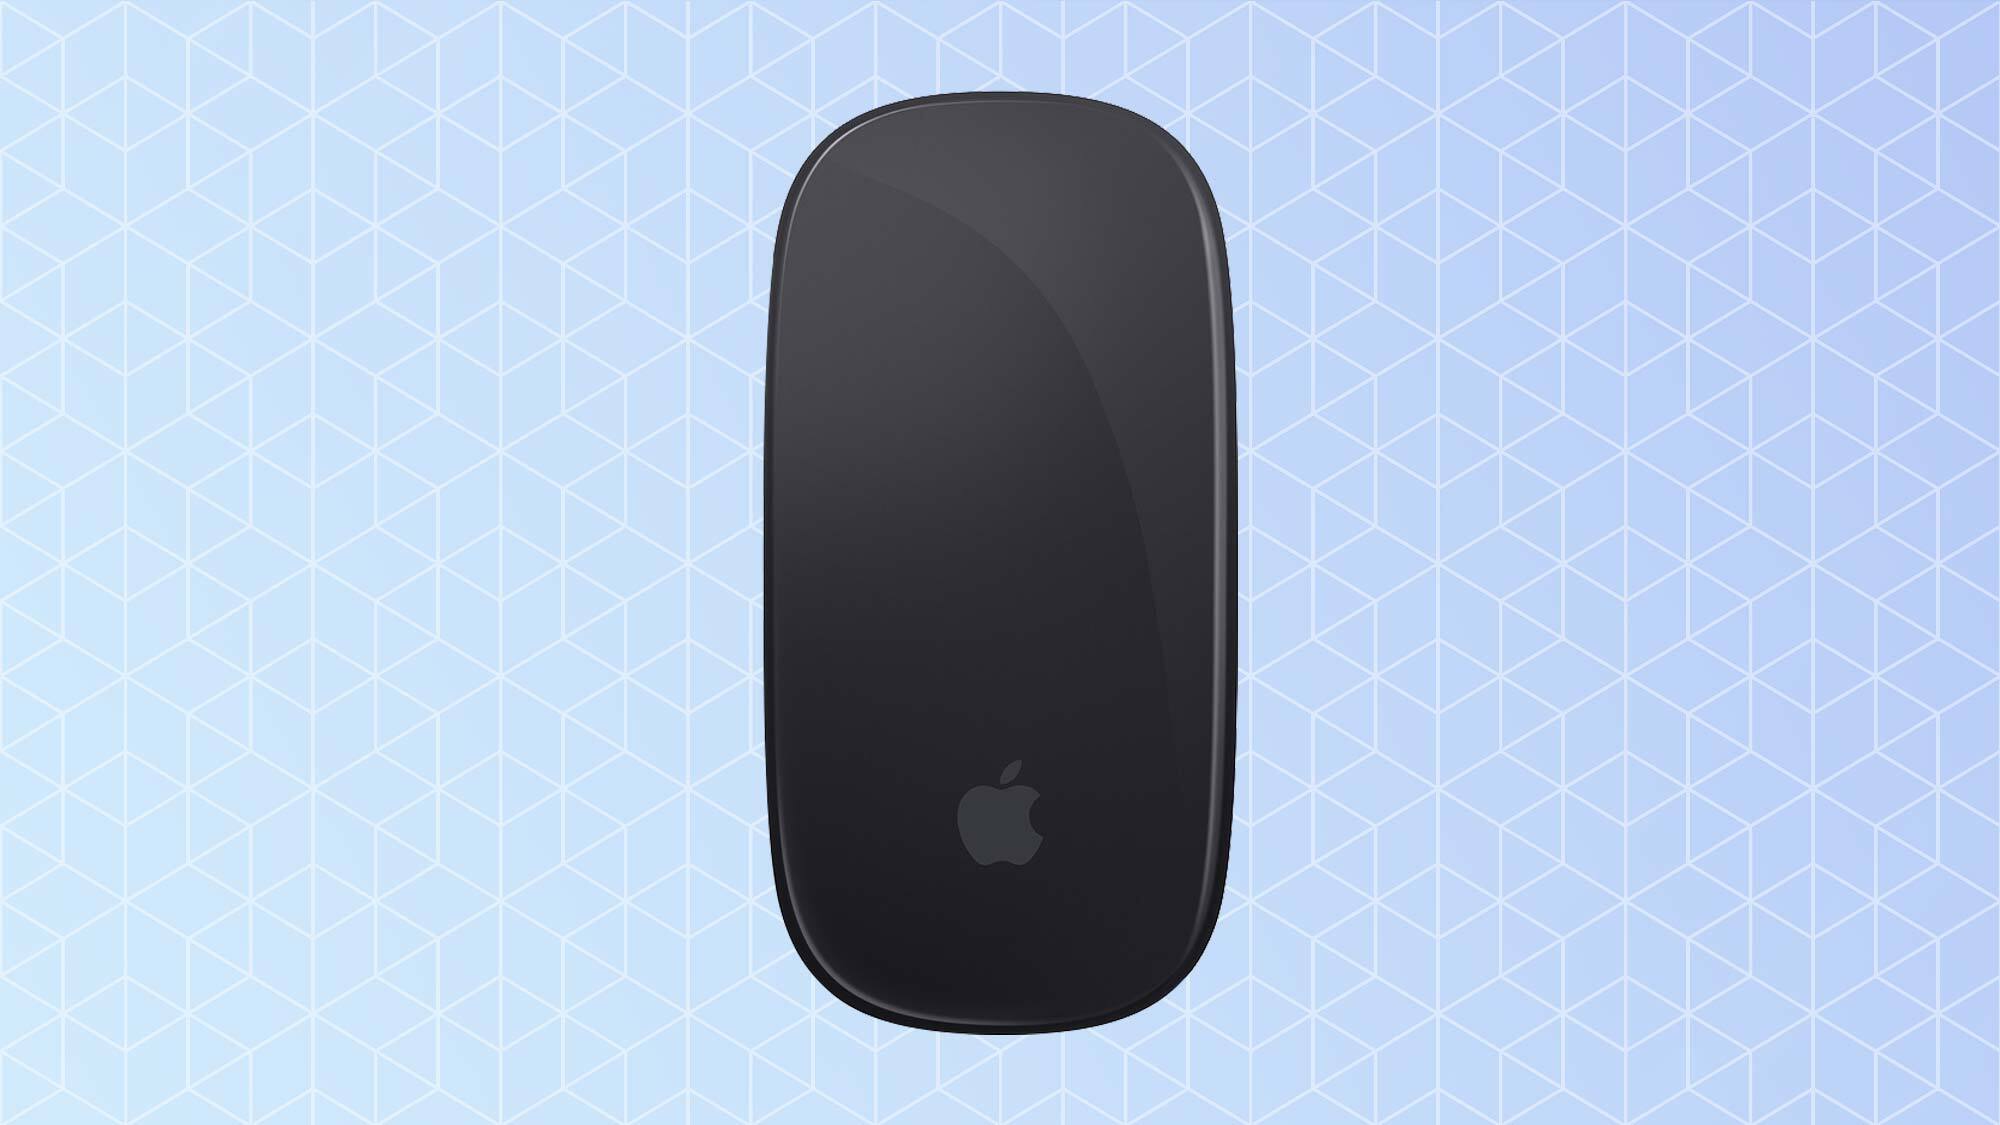 Best mouse: Apple magic mouse 2